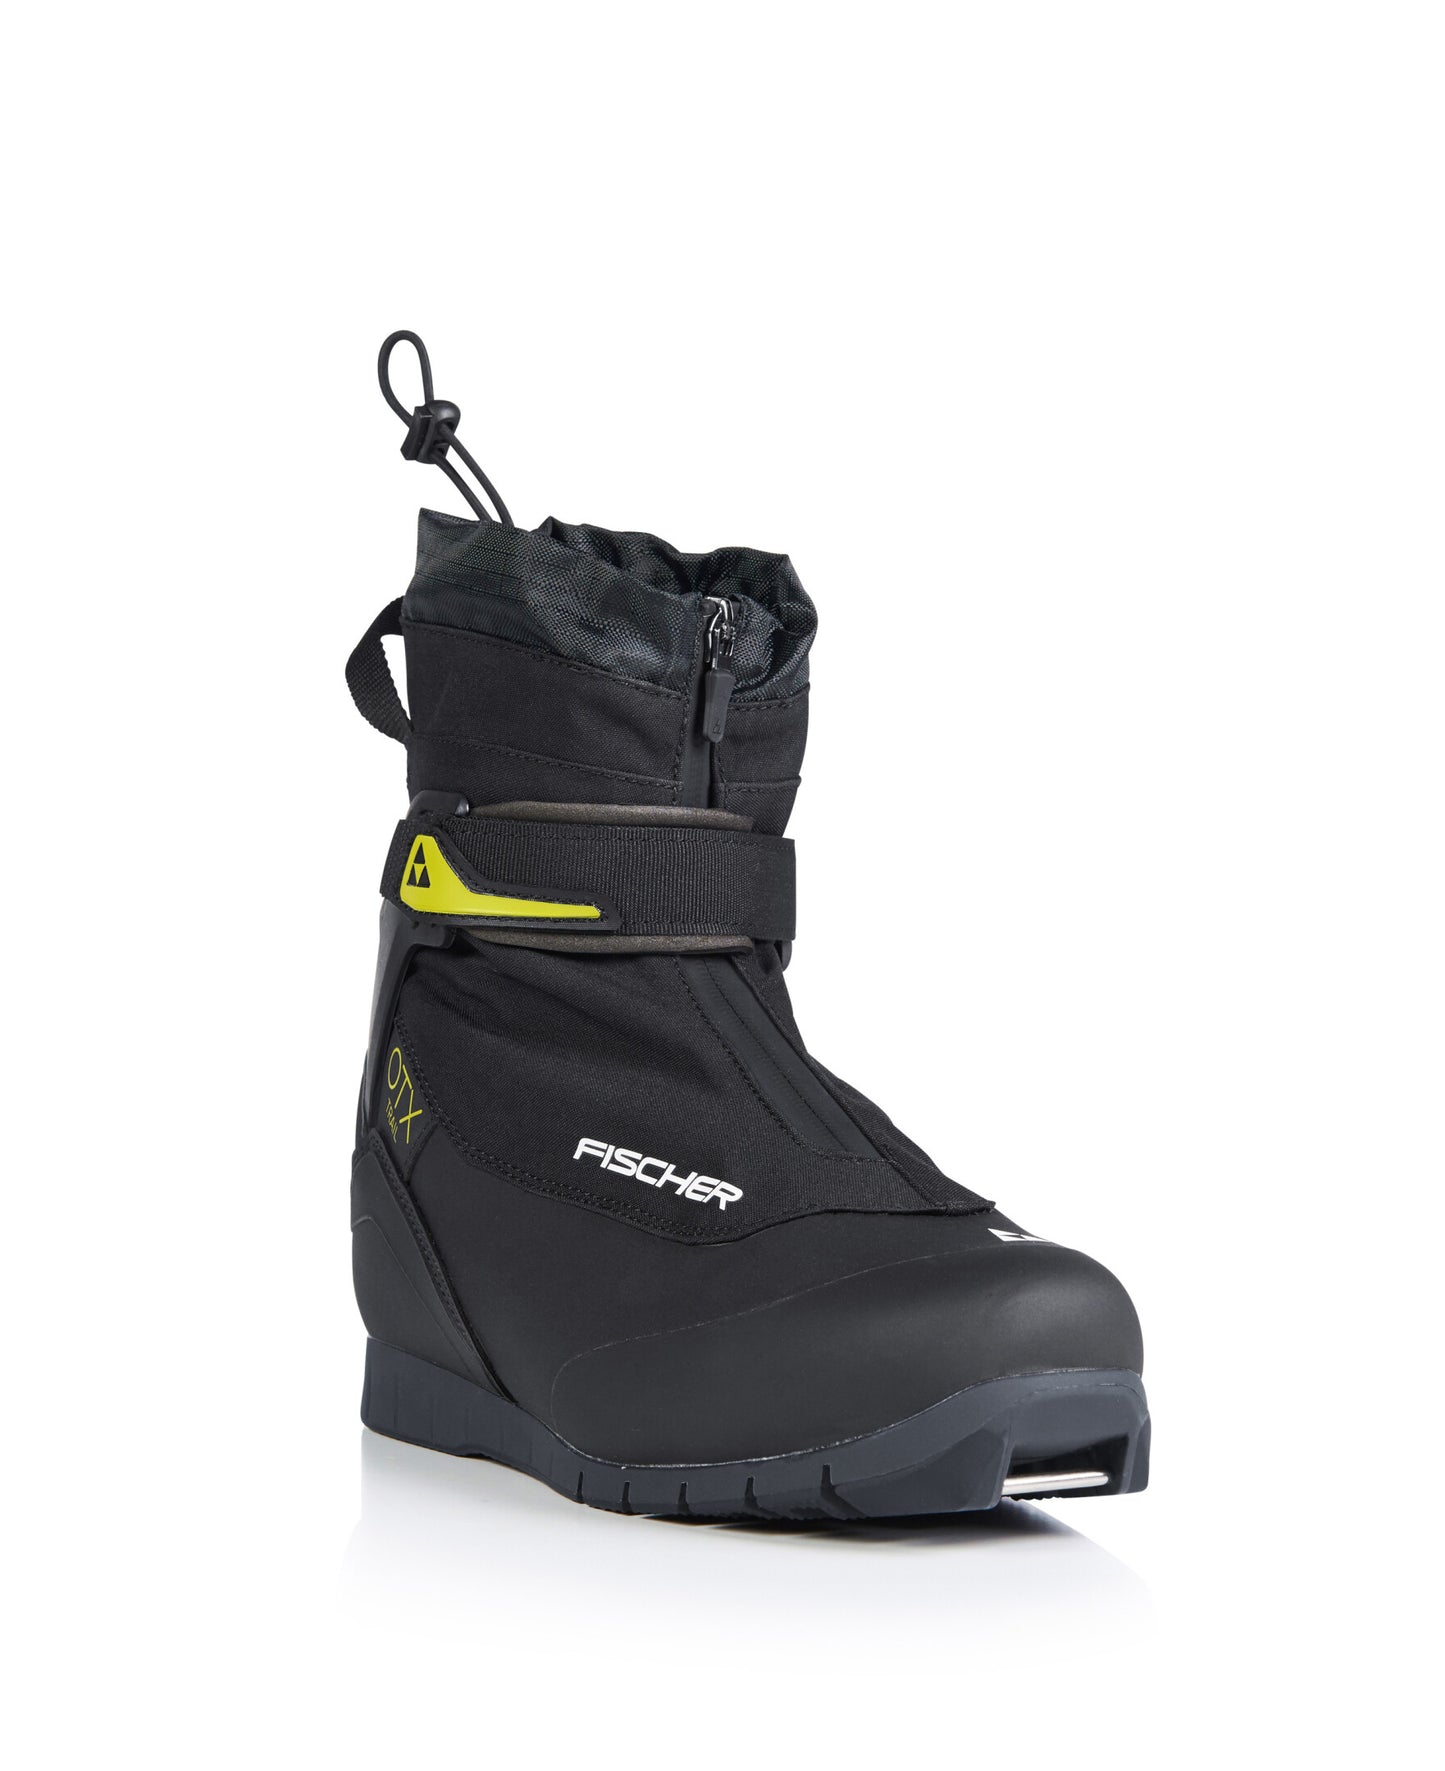 Fischer OTX Trail Cross-Country Ski Boots